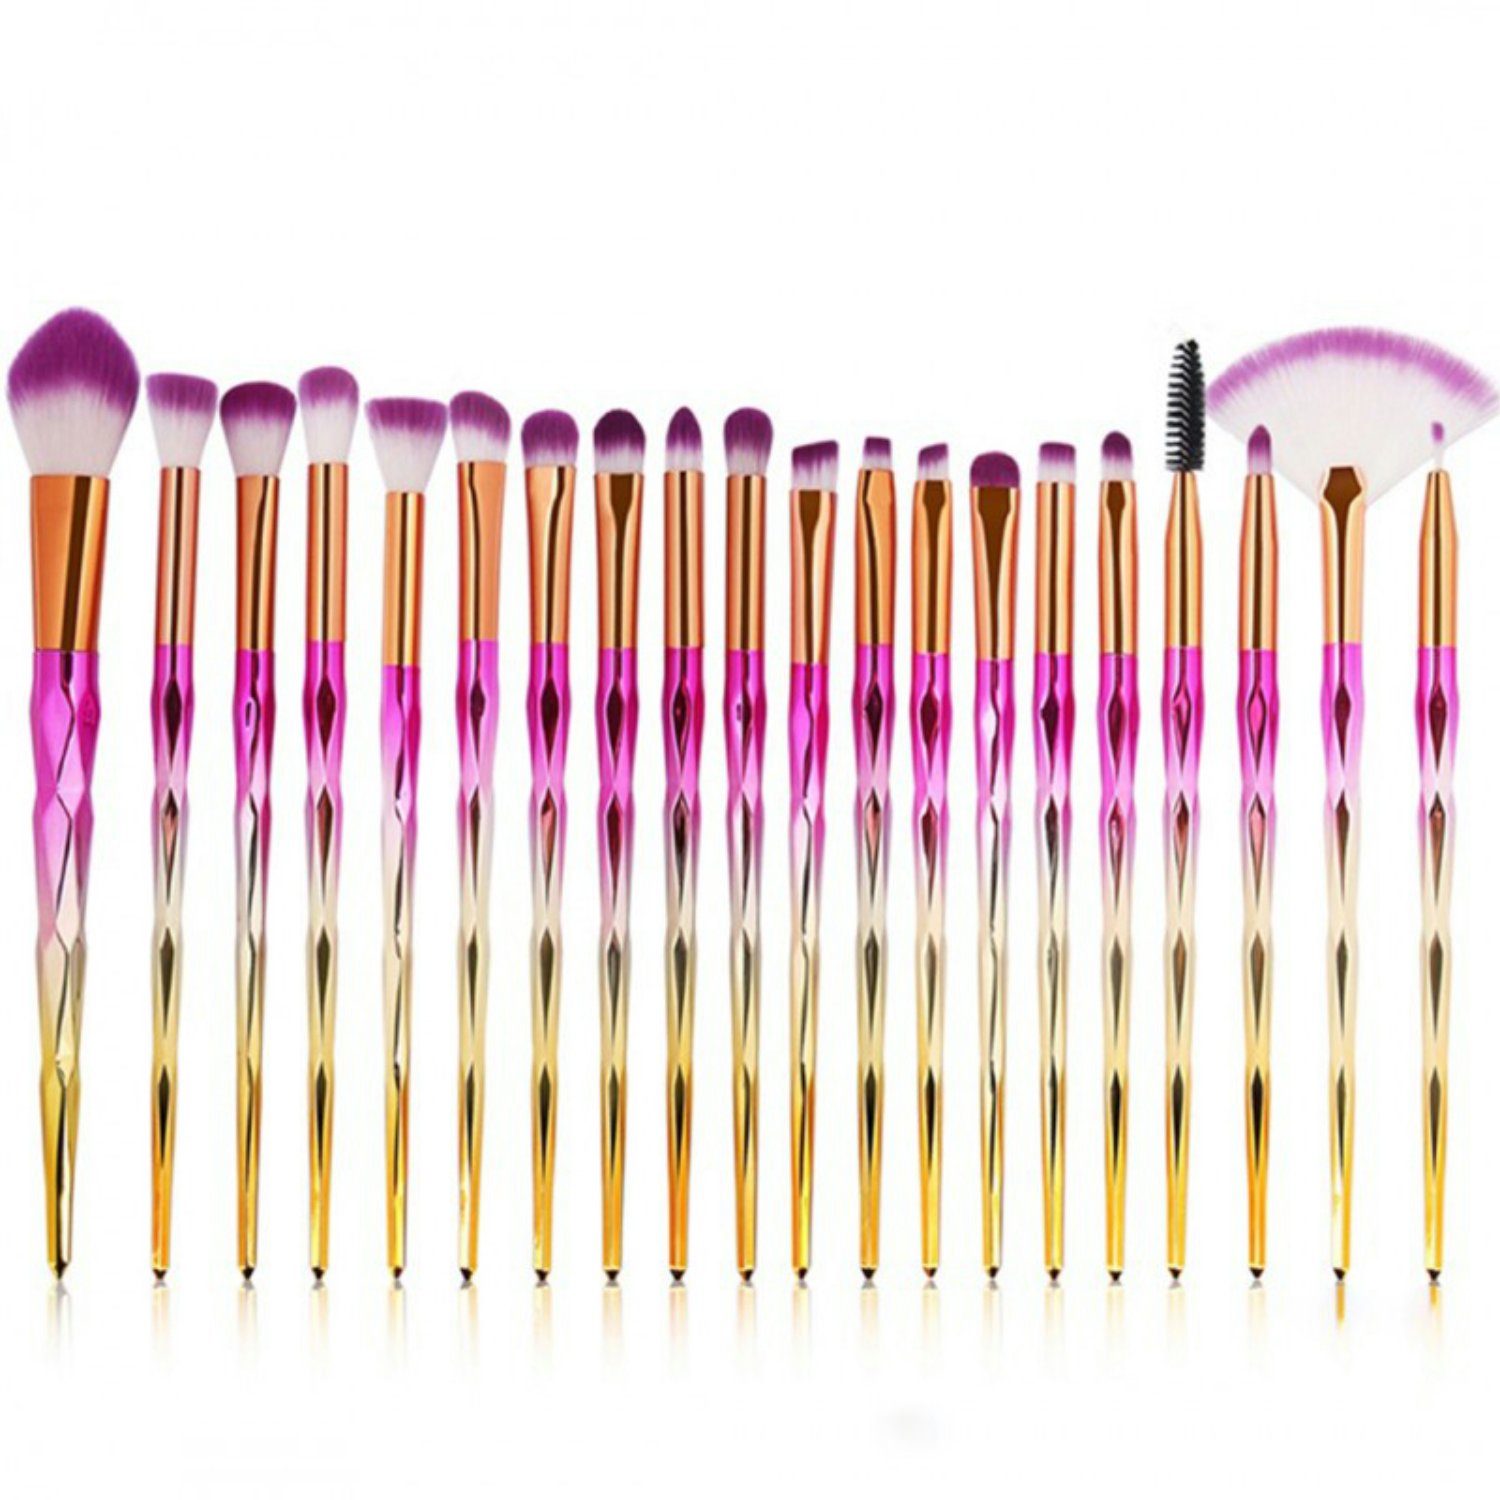 WS-Trend Kosmetikpinsel-Set 20-teiliges Kosmetik Augen Make-Up-Pinsel, 20 tlg., Schminckpinsel Pink | Make-Up-Pinsel